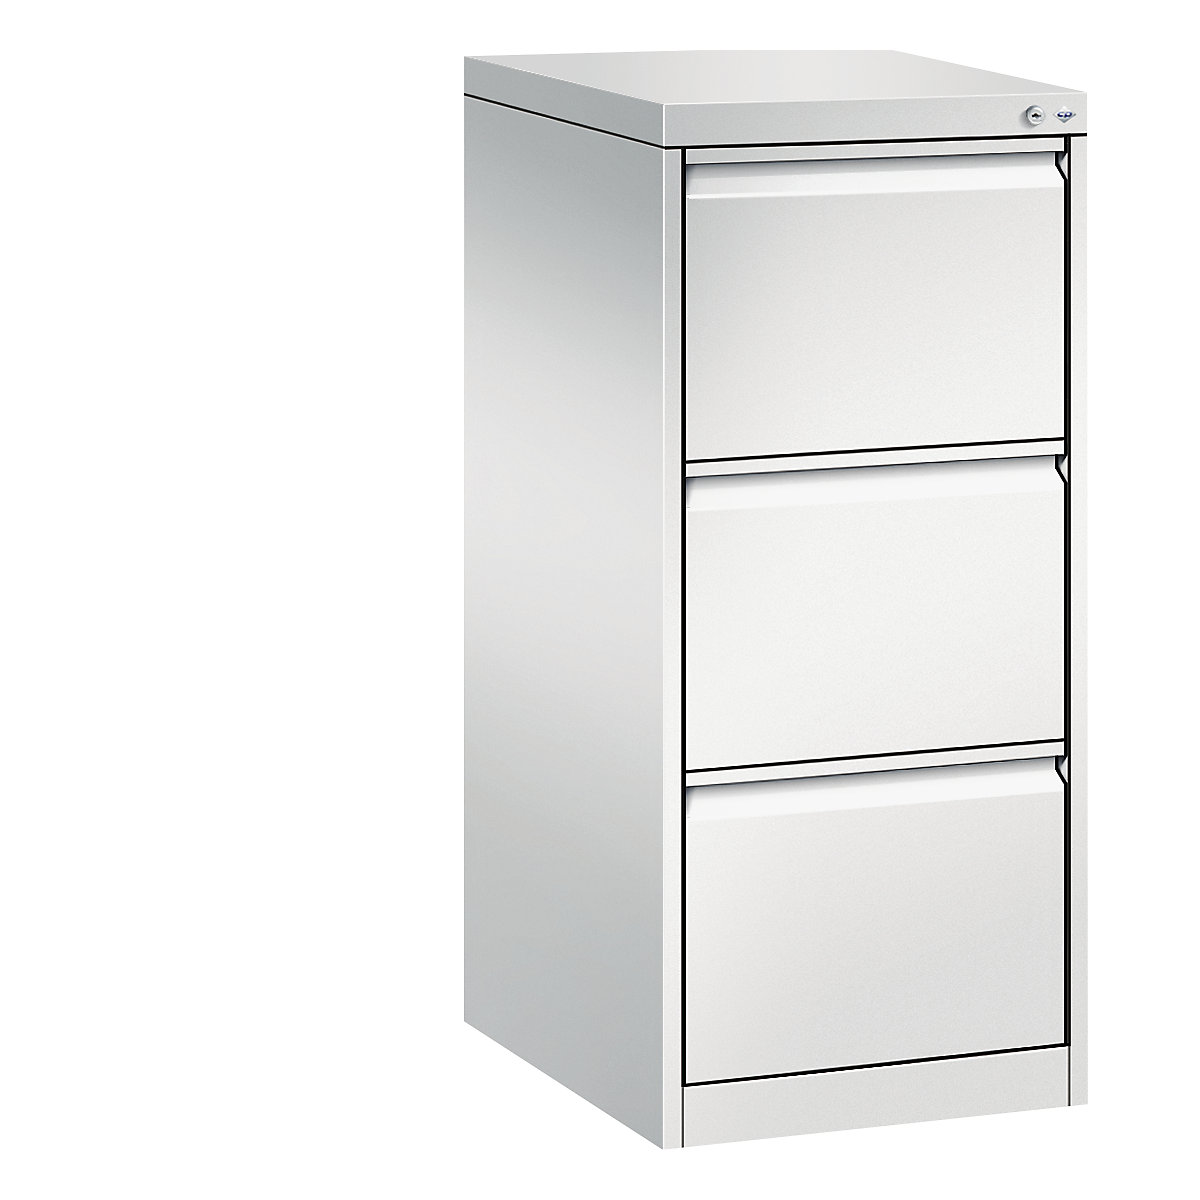 C+P – ACURADO suspension filing cabinet, 1 track, 3 drawers, light grey